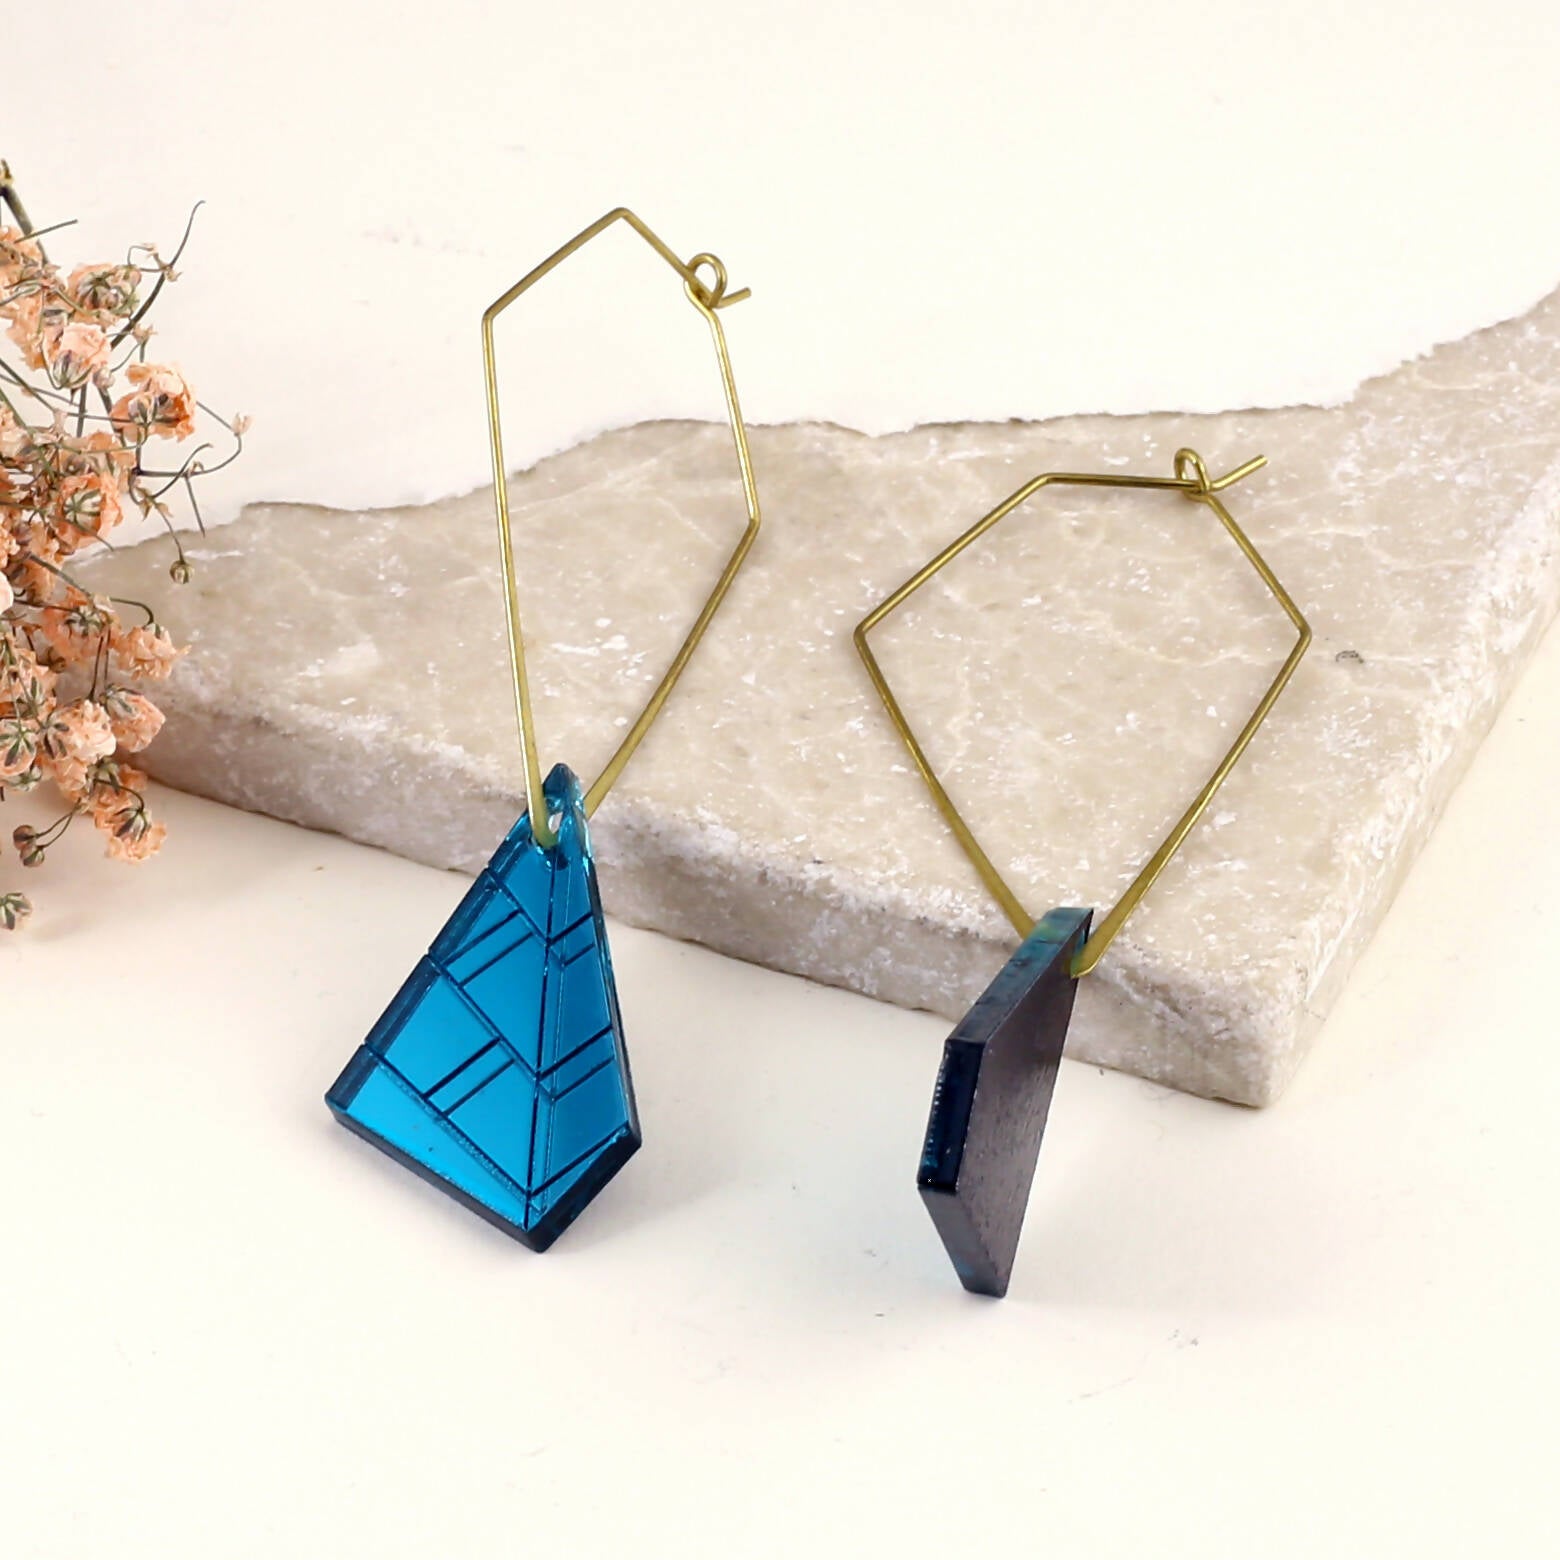 Kodes-acrylic-art-deco-earrings-blue-mirror-brass-KK0024d-0001-square